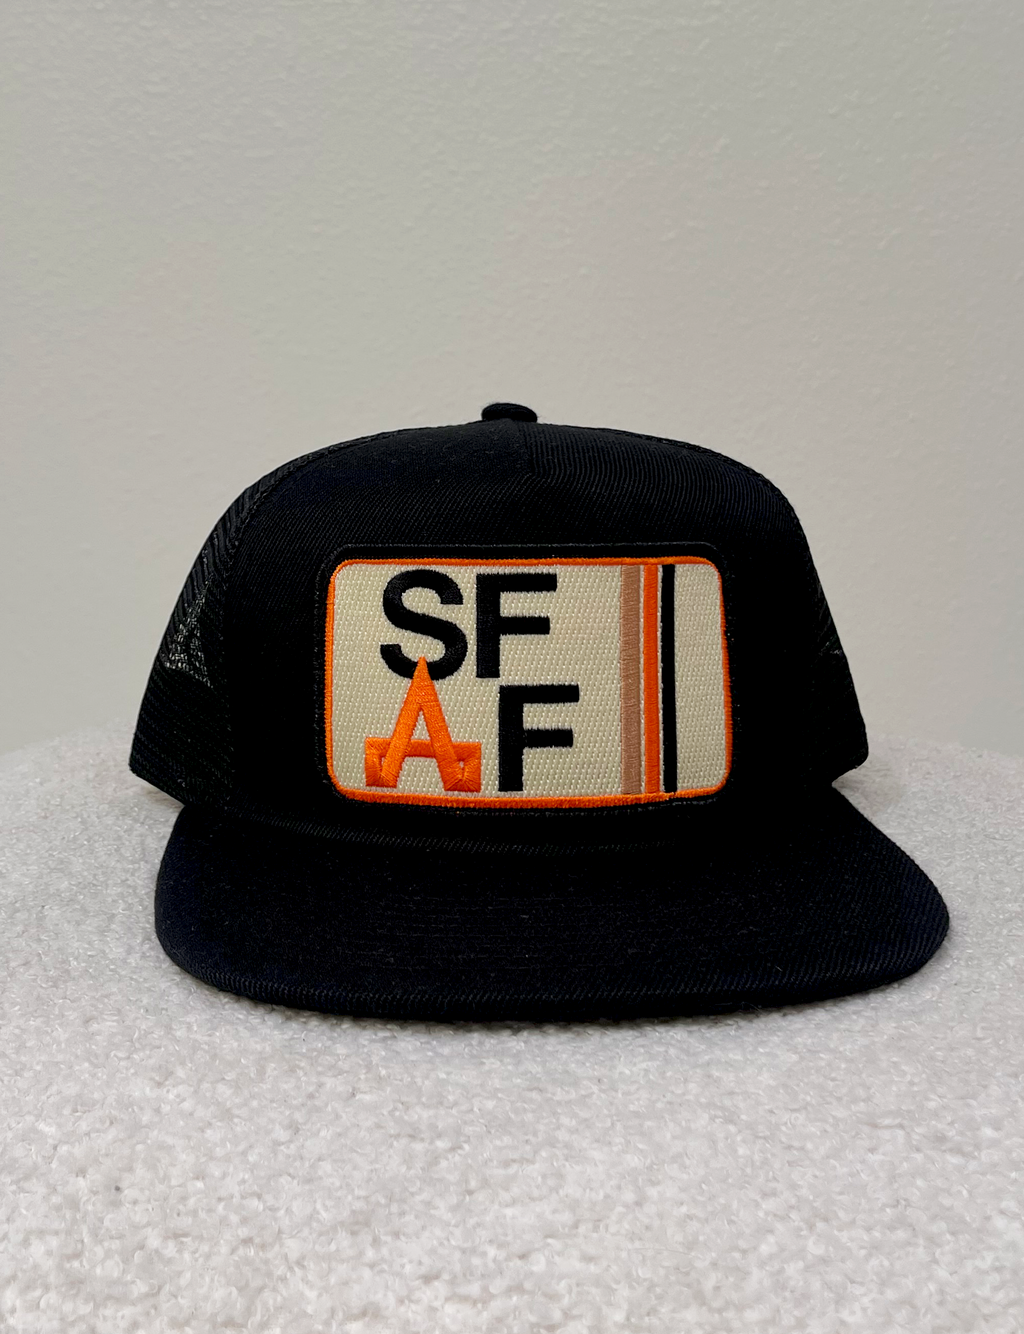 Trucker Hat, Frisco (Giants)